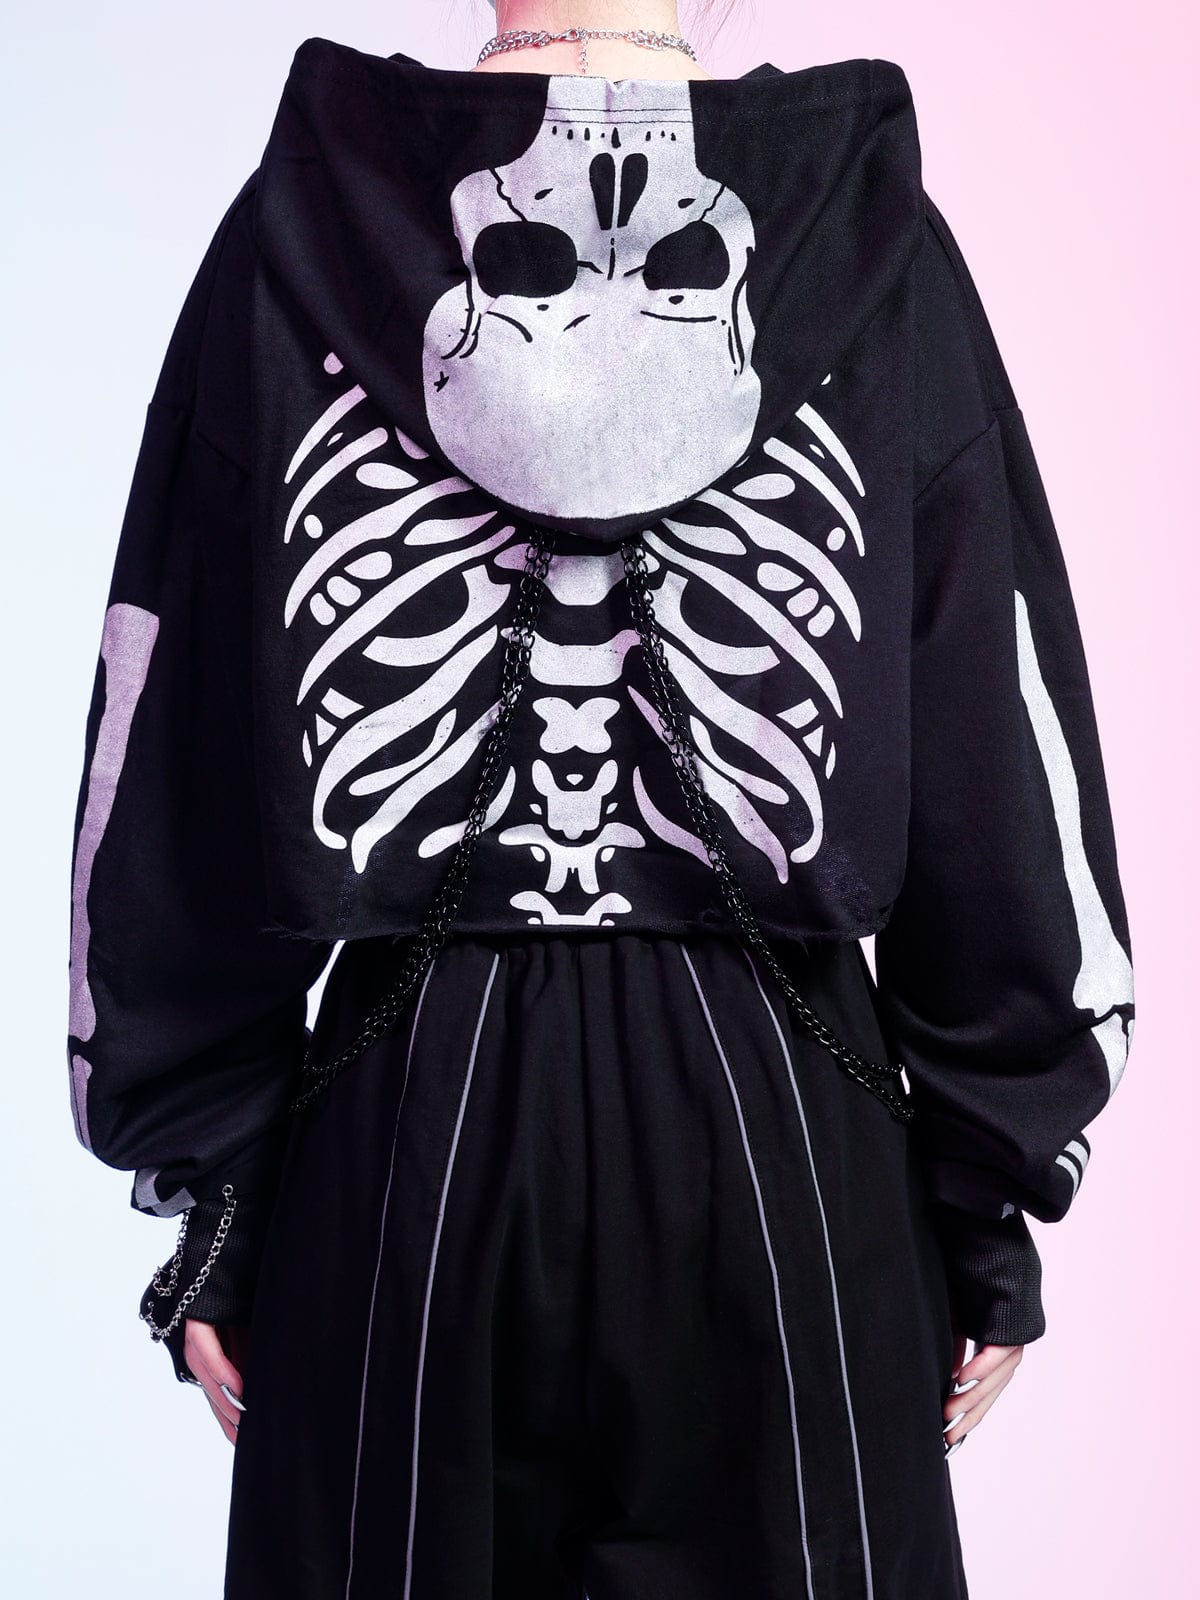 Skull Print Reflective Cropped Hoodie Streetwear Brand Techwear Combat Tactical YUGEN THEORY